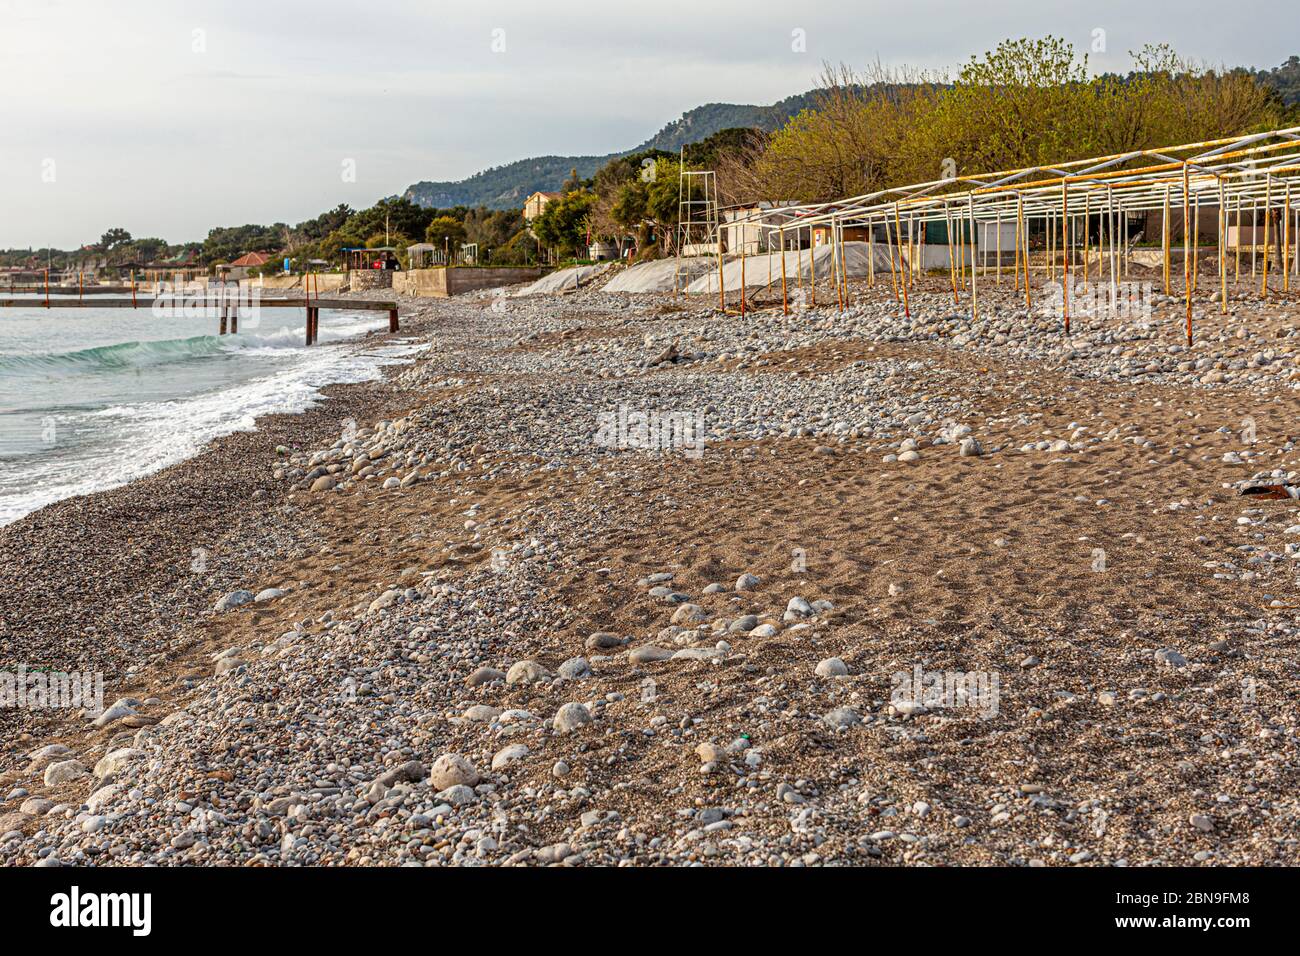 Deserted tourist facilities in Turkey Stock Photo